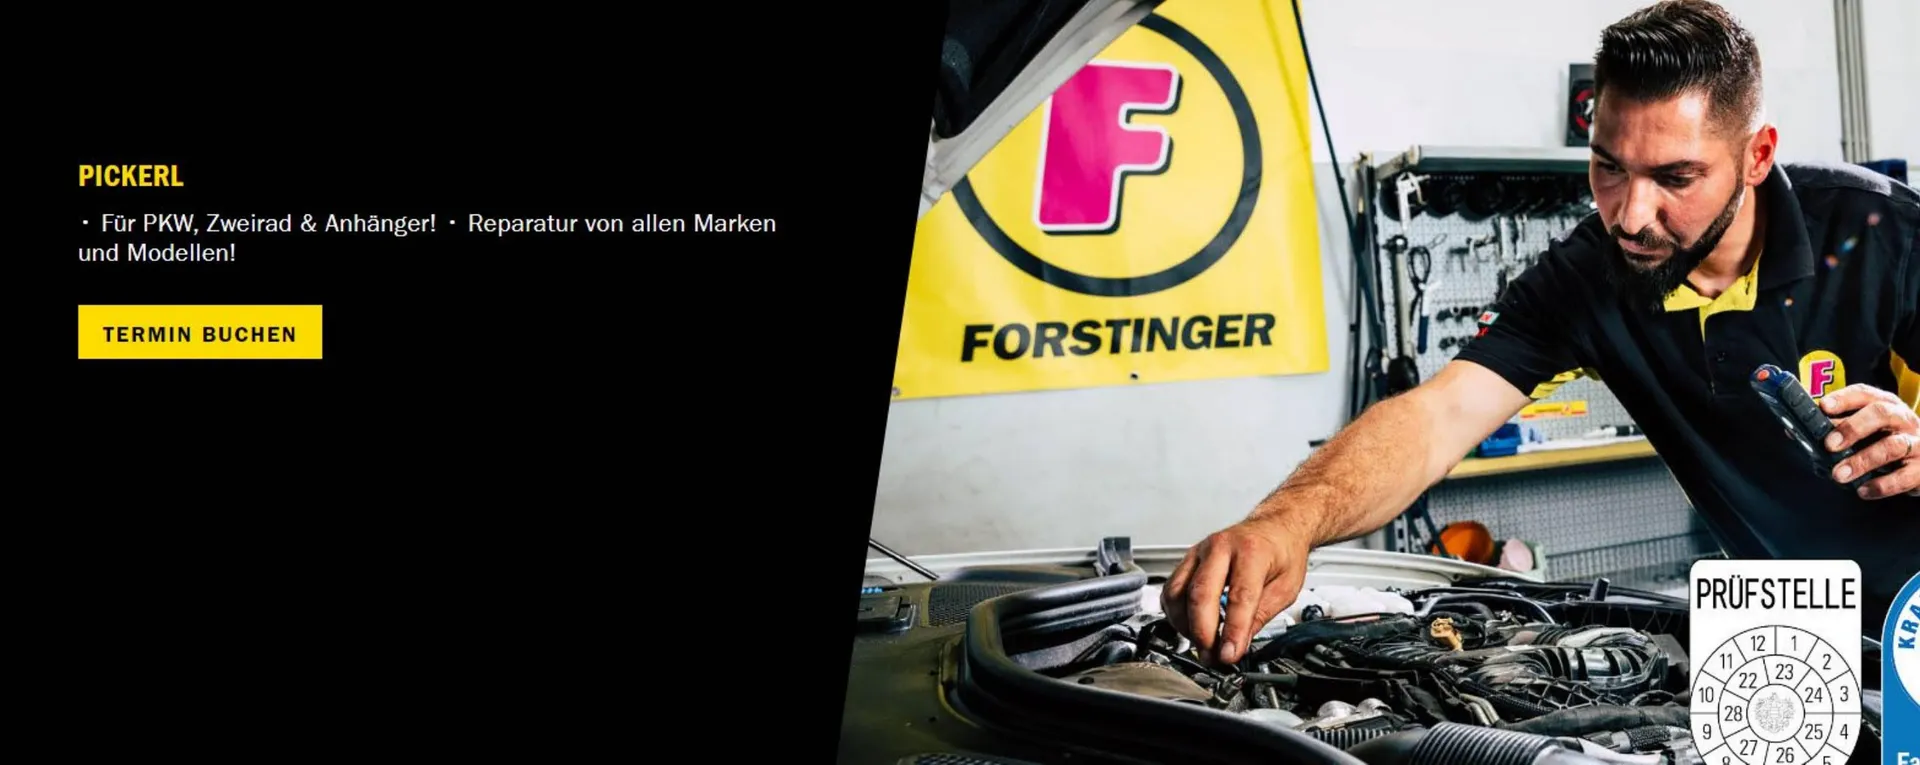 Forstinger Flugblatt - 2